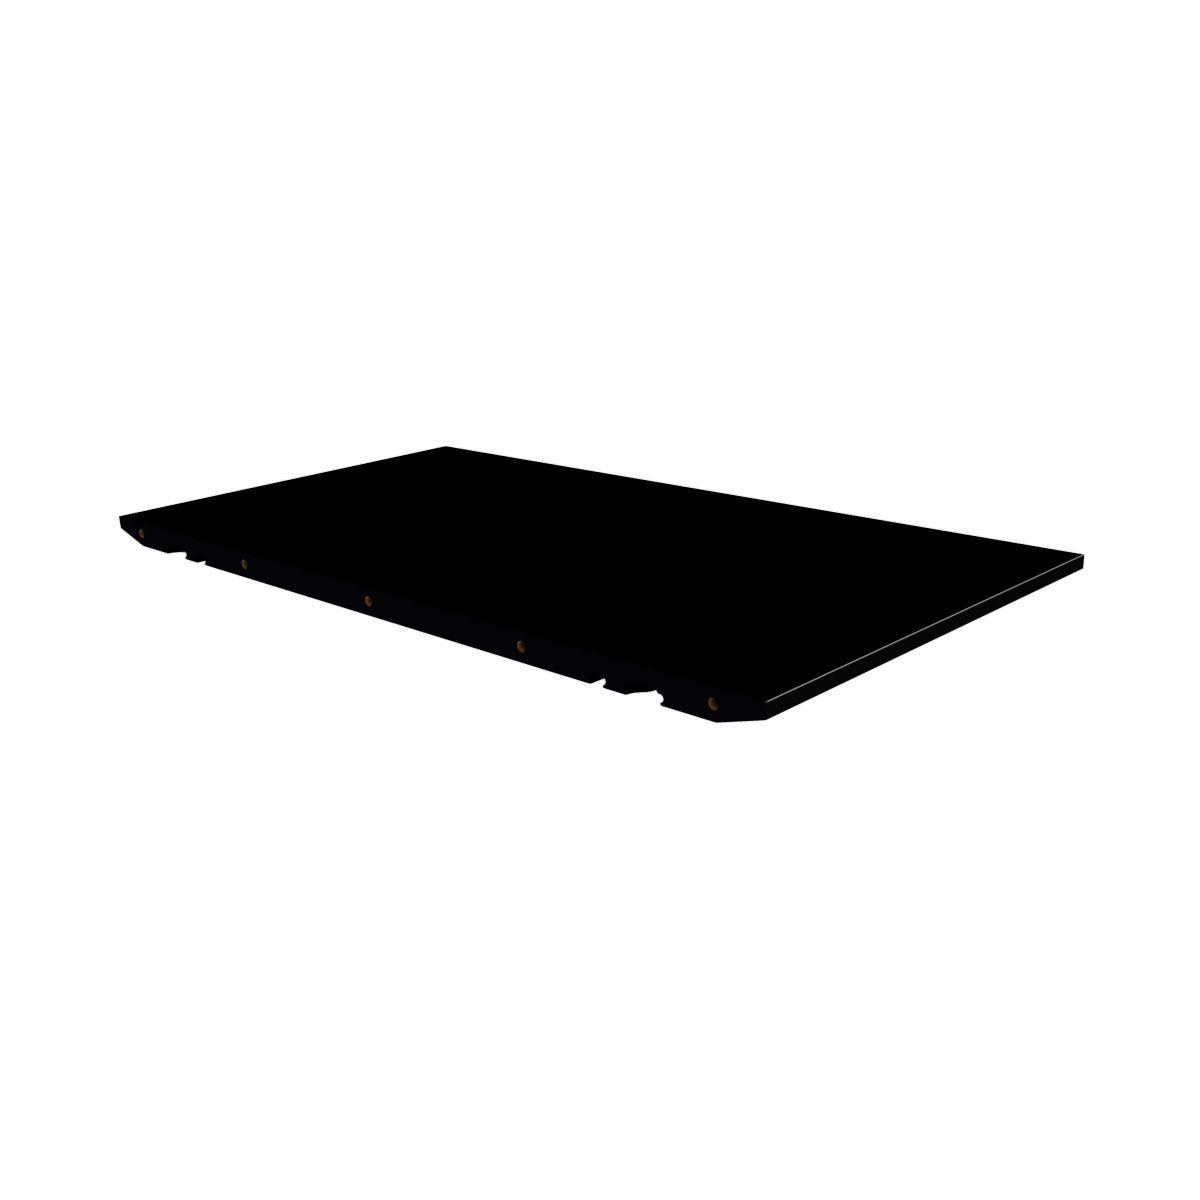 T1 tillægsplade til Andersen T1 spisebord - sort laminat diamond black - 50x95 cm